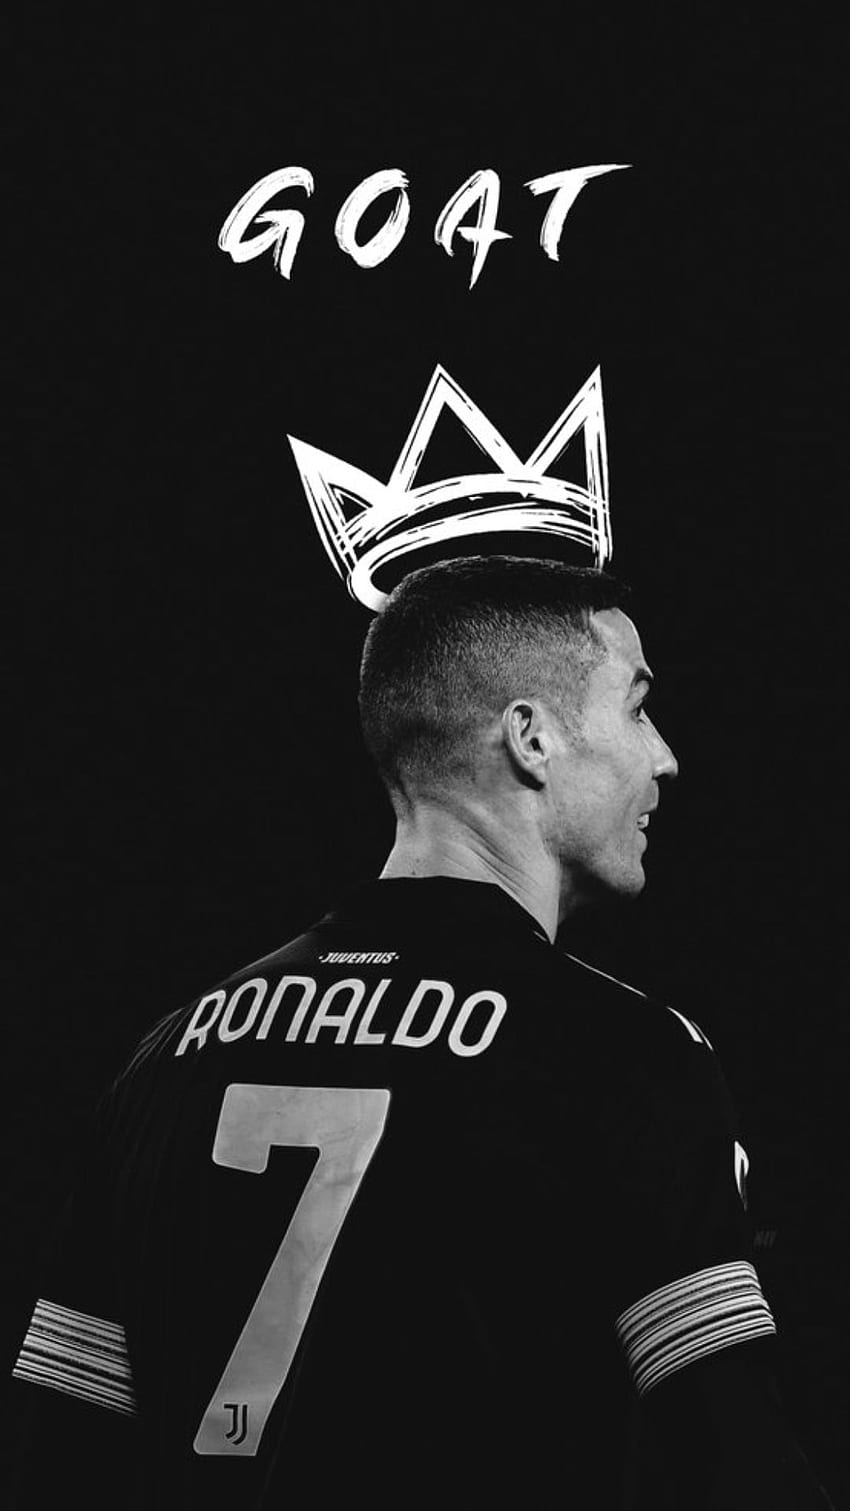 100+] Cristiano Ronaldo Portugal Wallpapers | Wallpapers.com